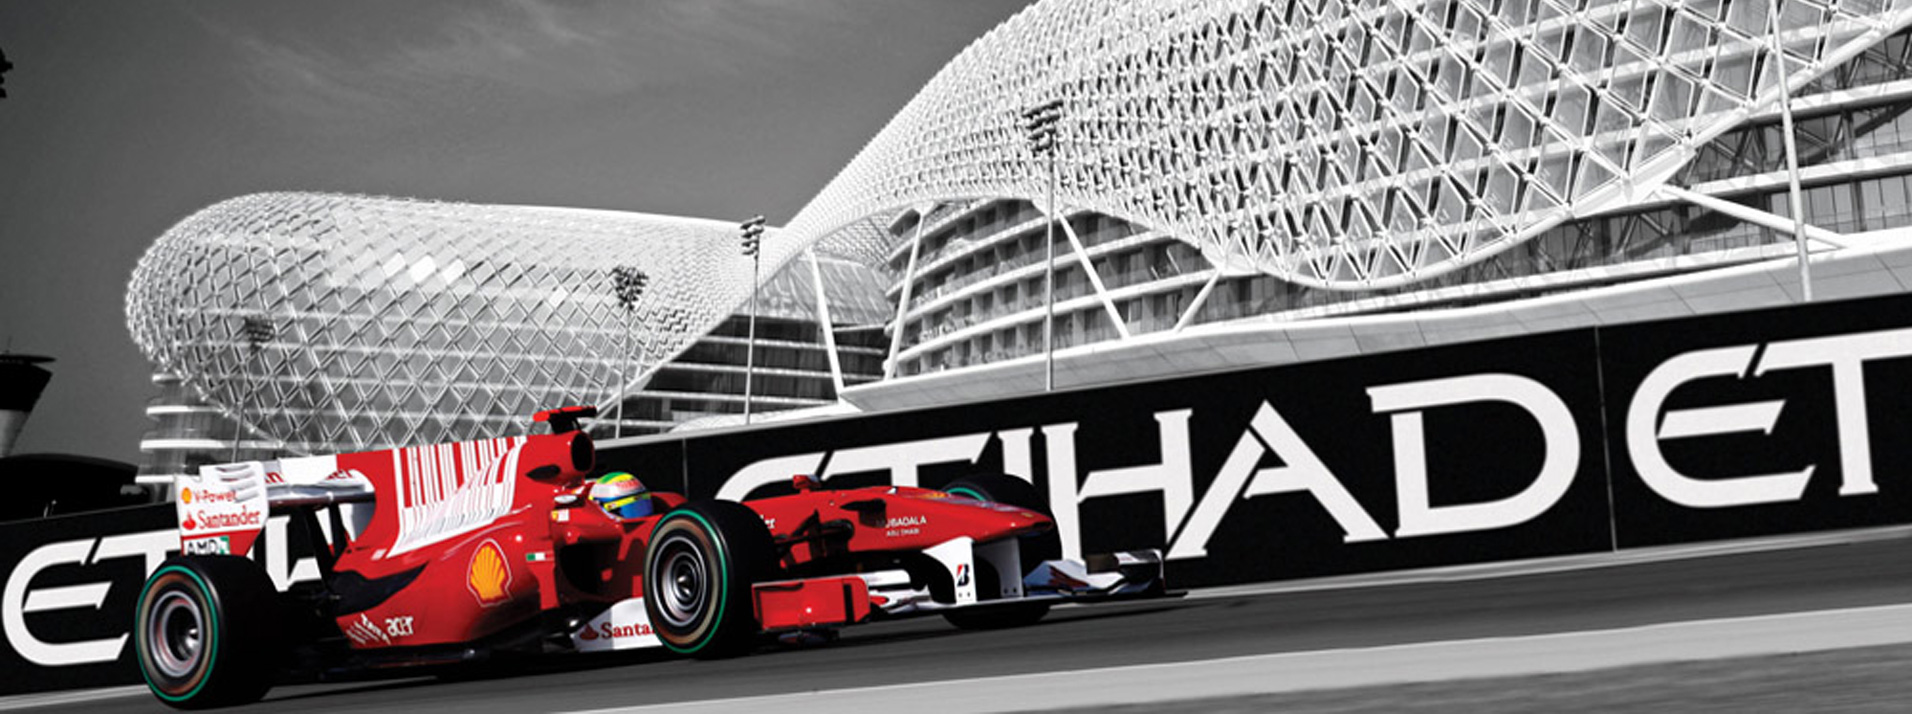 F1 Grand Prix Abu Dhabi 2014